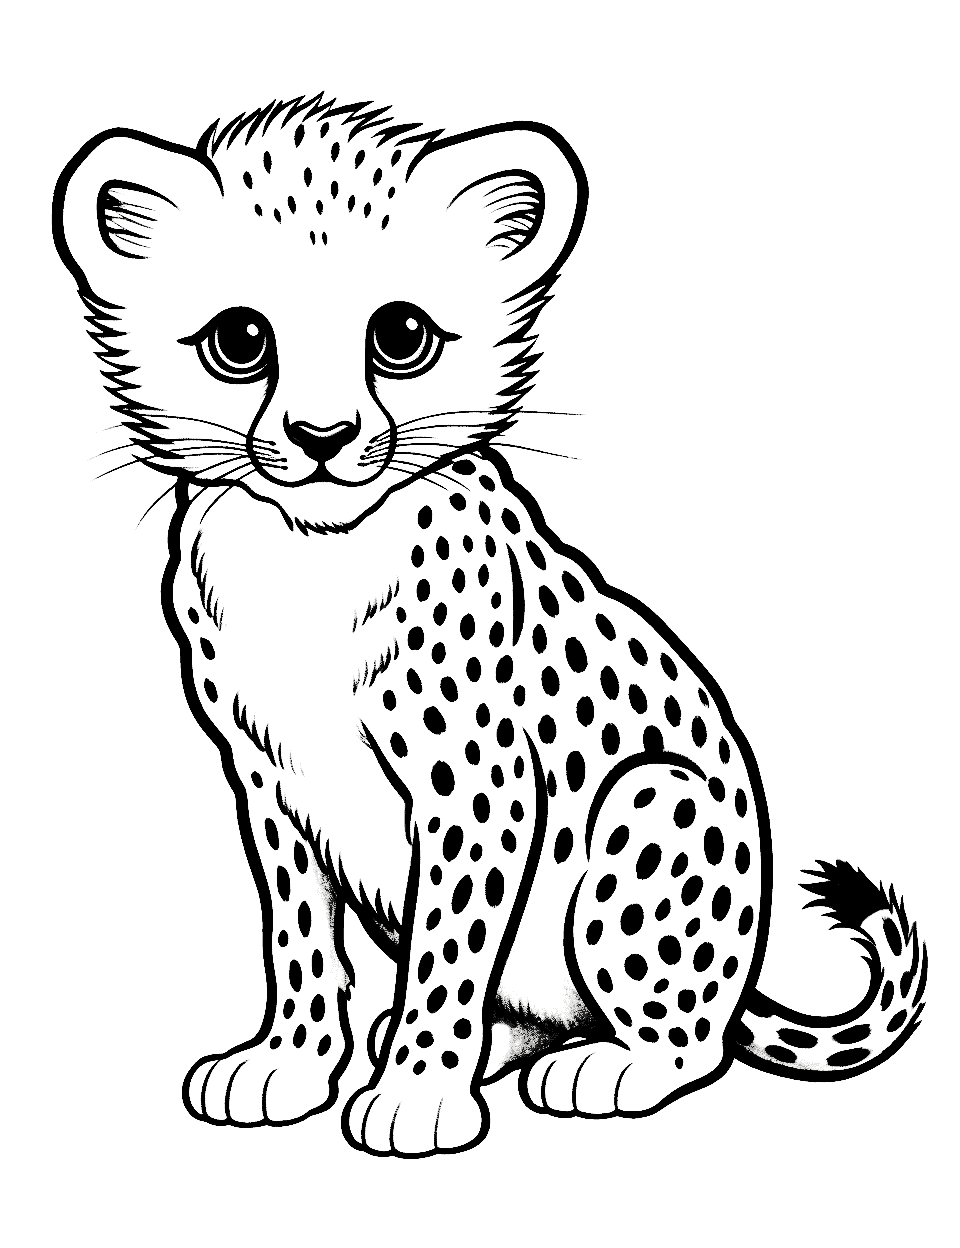 Curious Cheetah Cub Exploring Coloring Page - A curious cheetah cub exploring its surroundings.